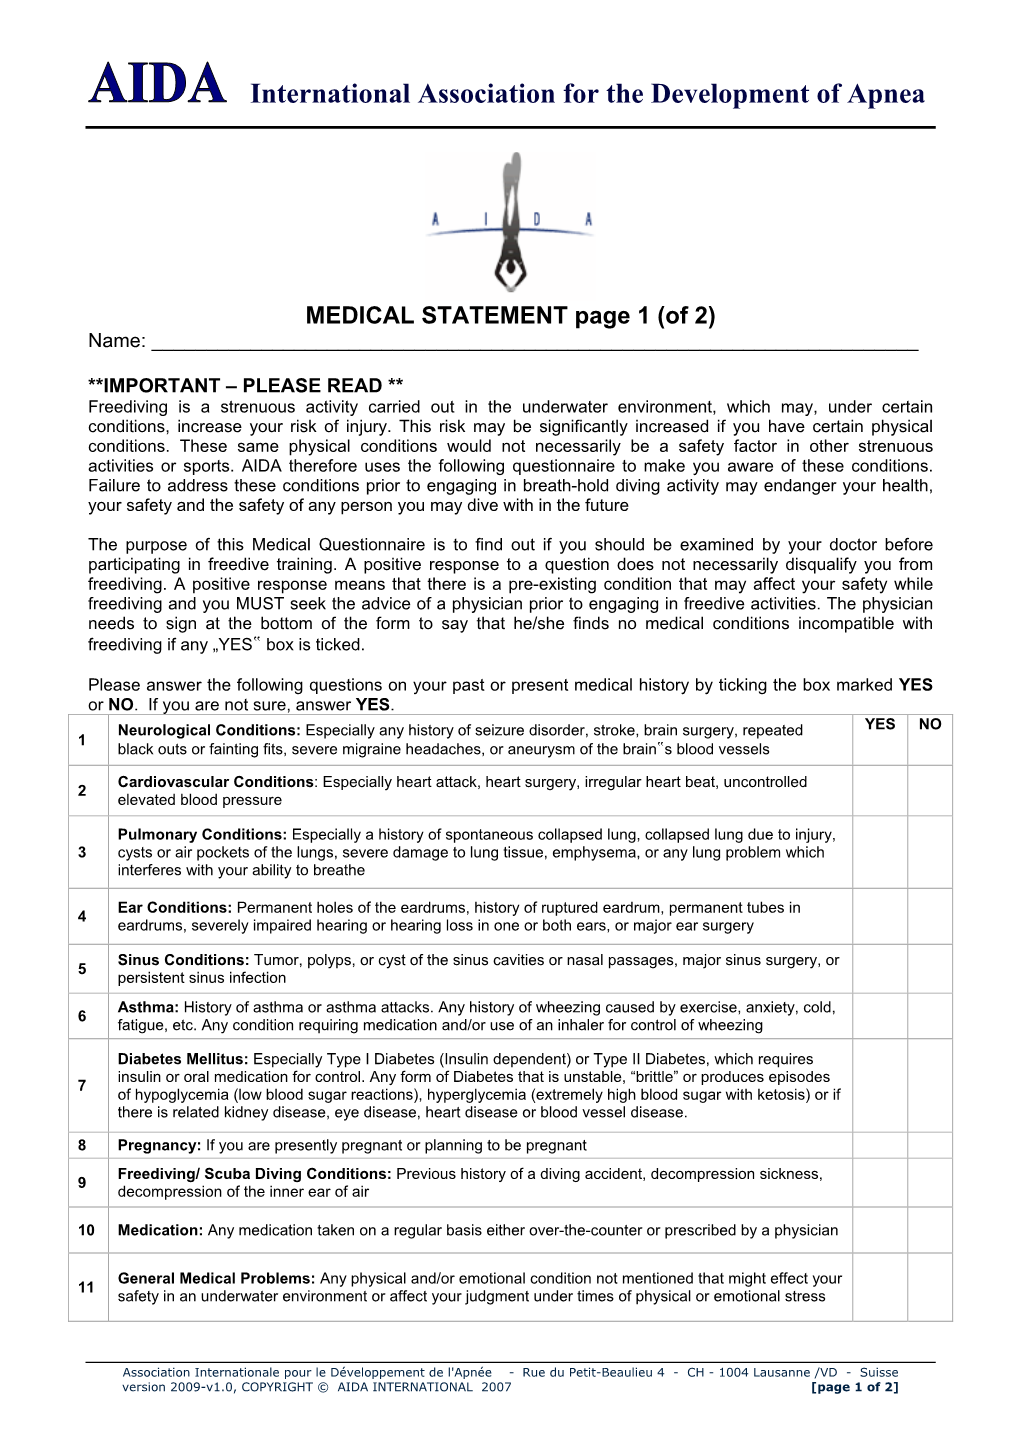 AIDA International Medical Statement